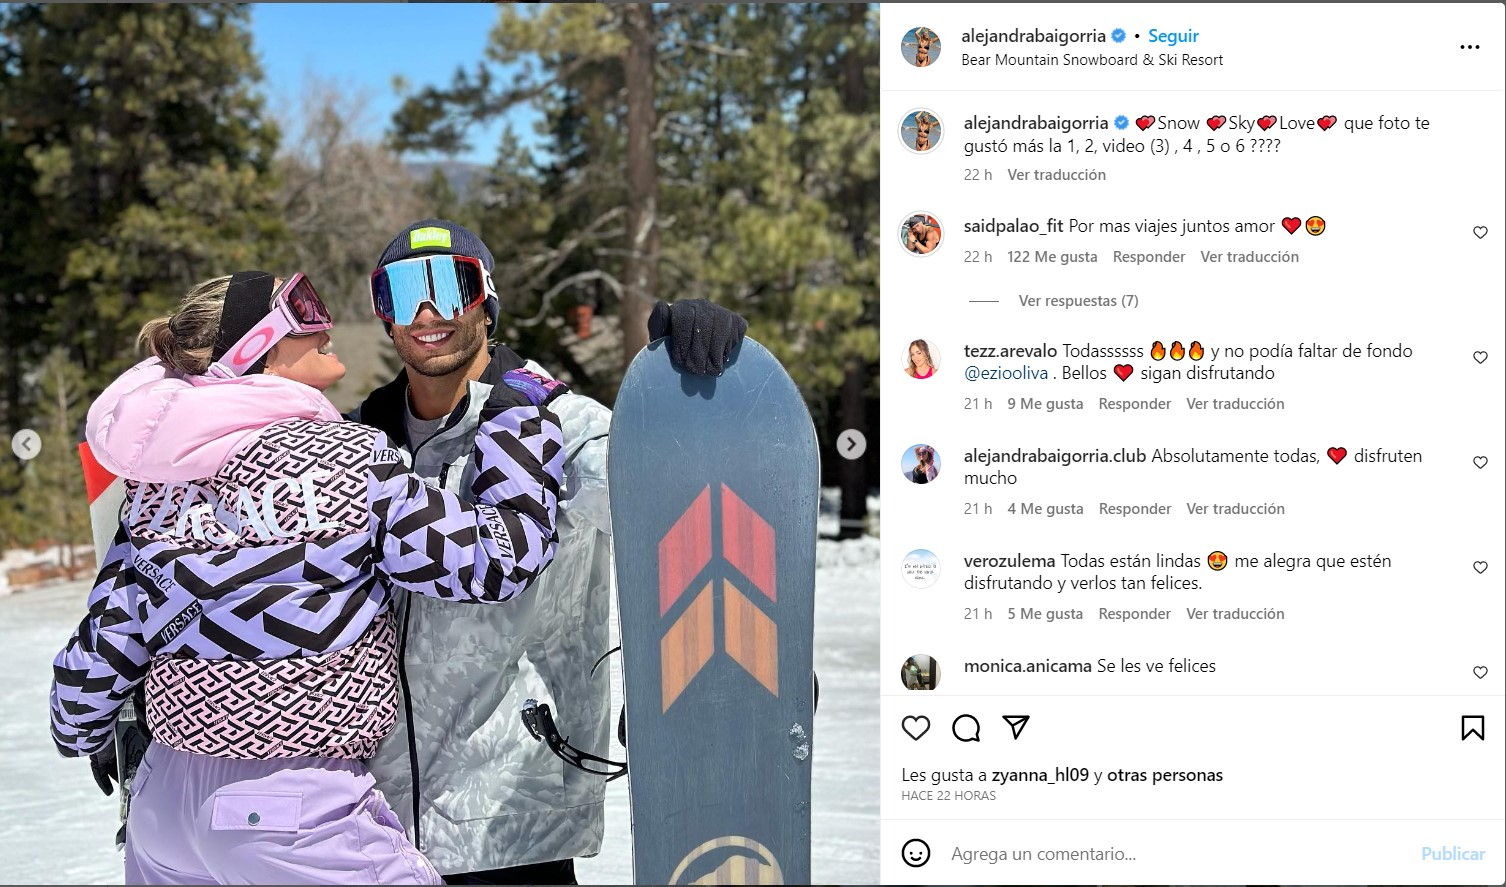 Alejandra Baigorria and Said Palao ski in New York for Easter: 